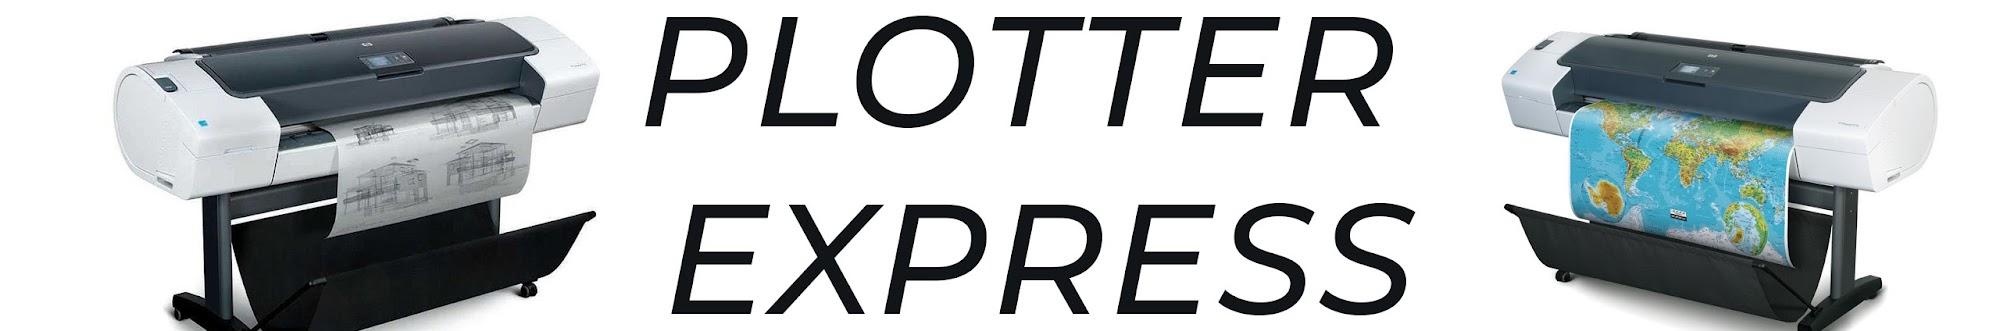 Plotter Express